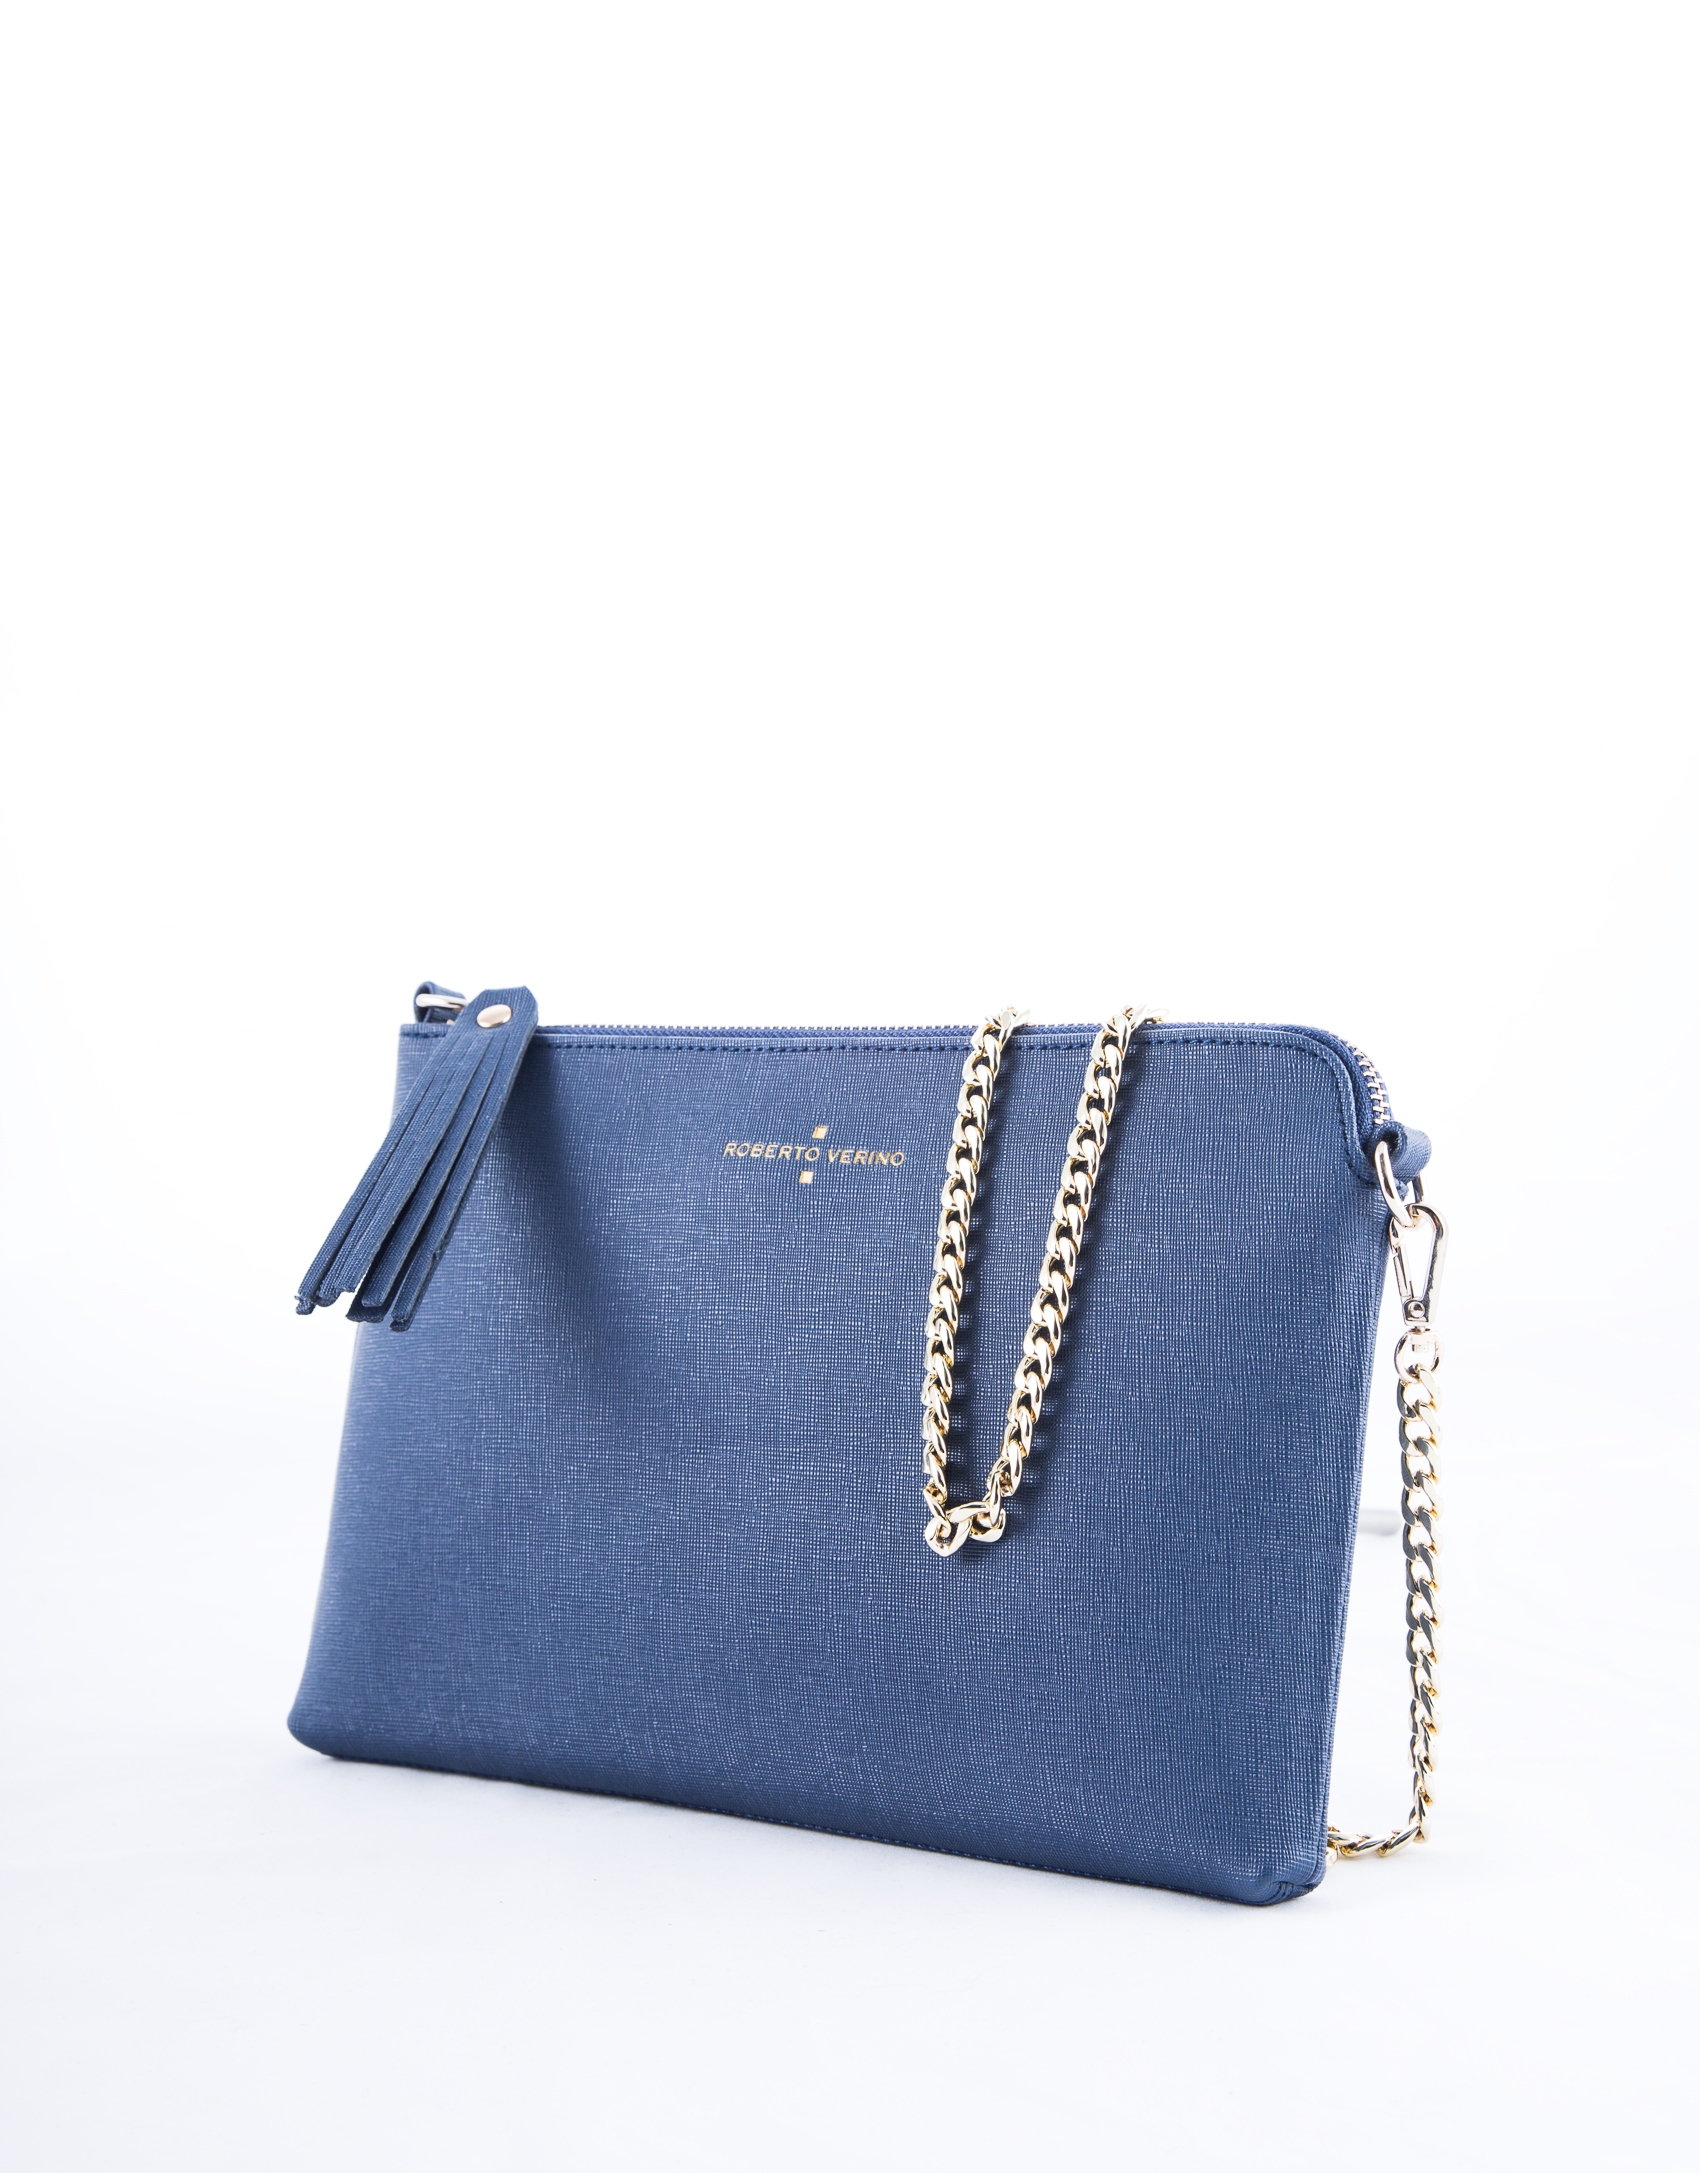 Navy blue leather Lisa clutch bag